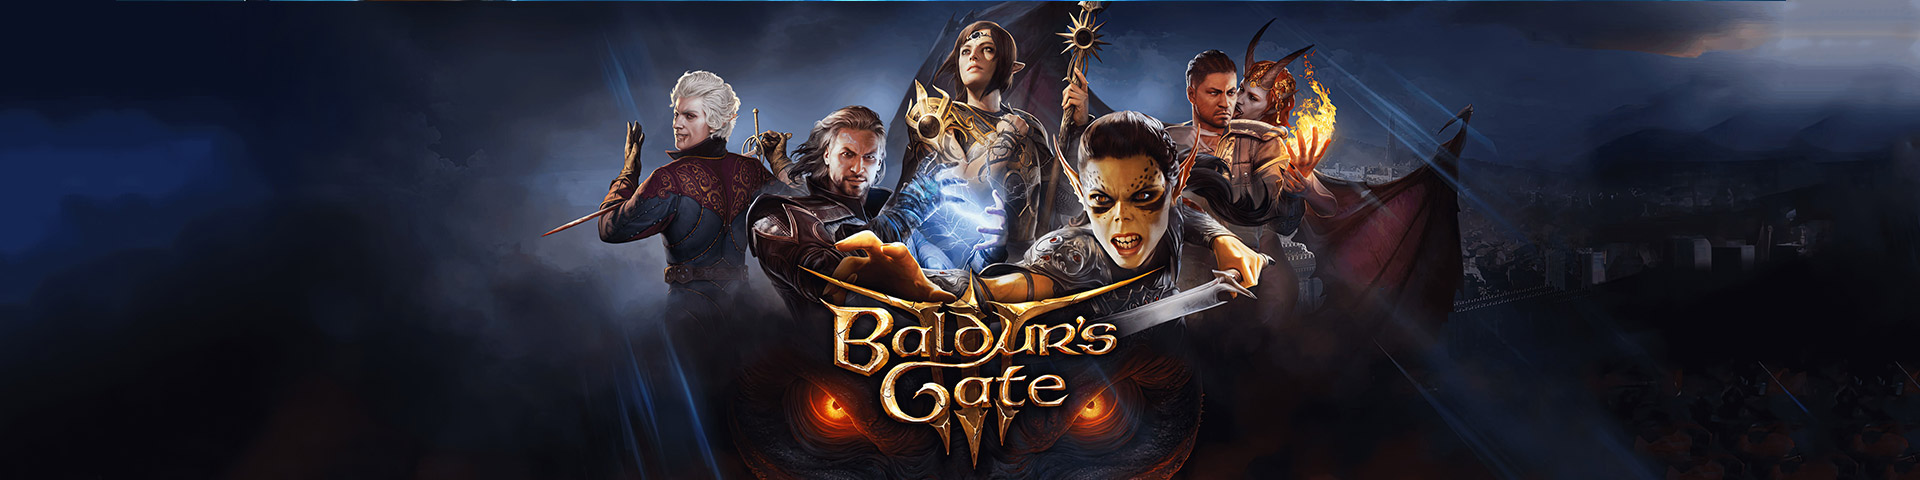 Baldur's Gate 3 promo art 1